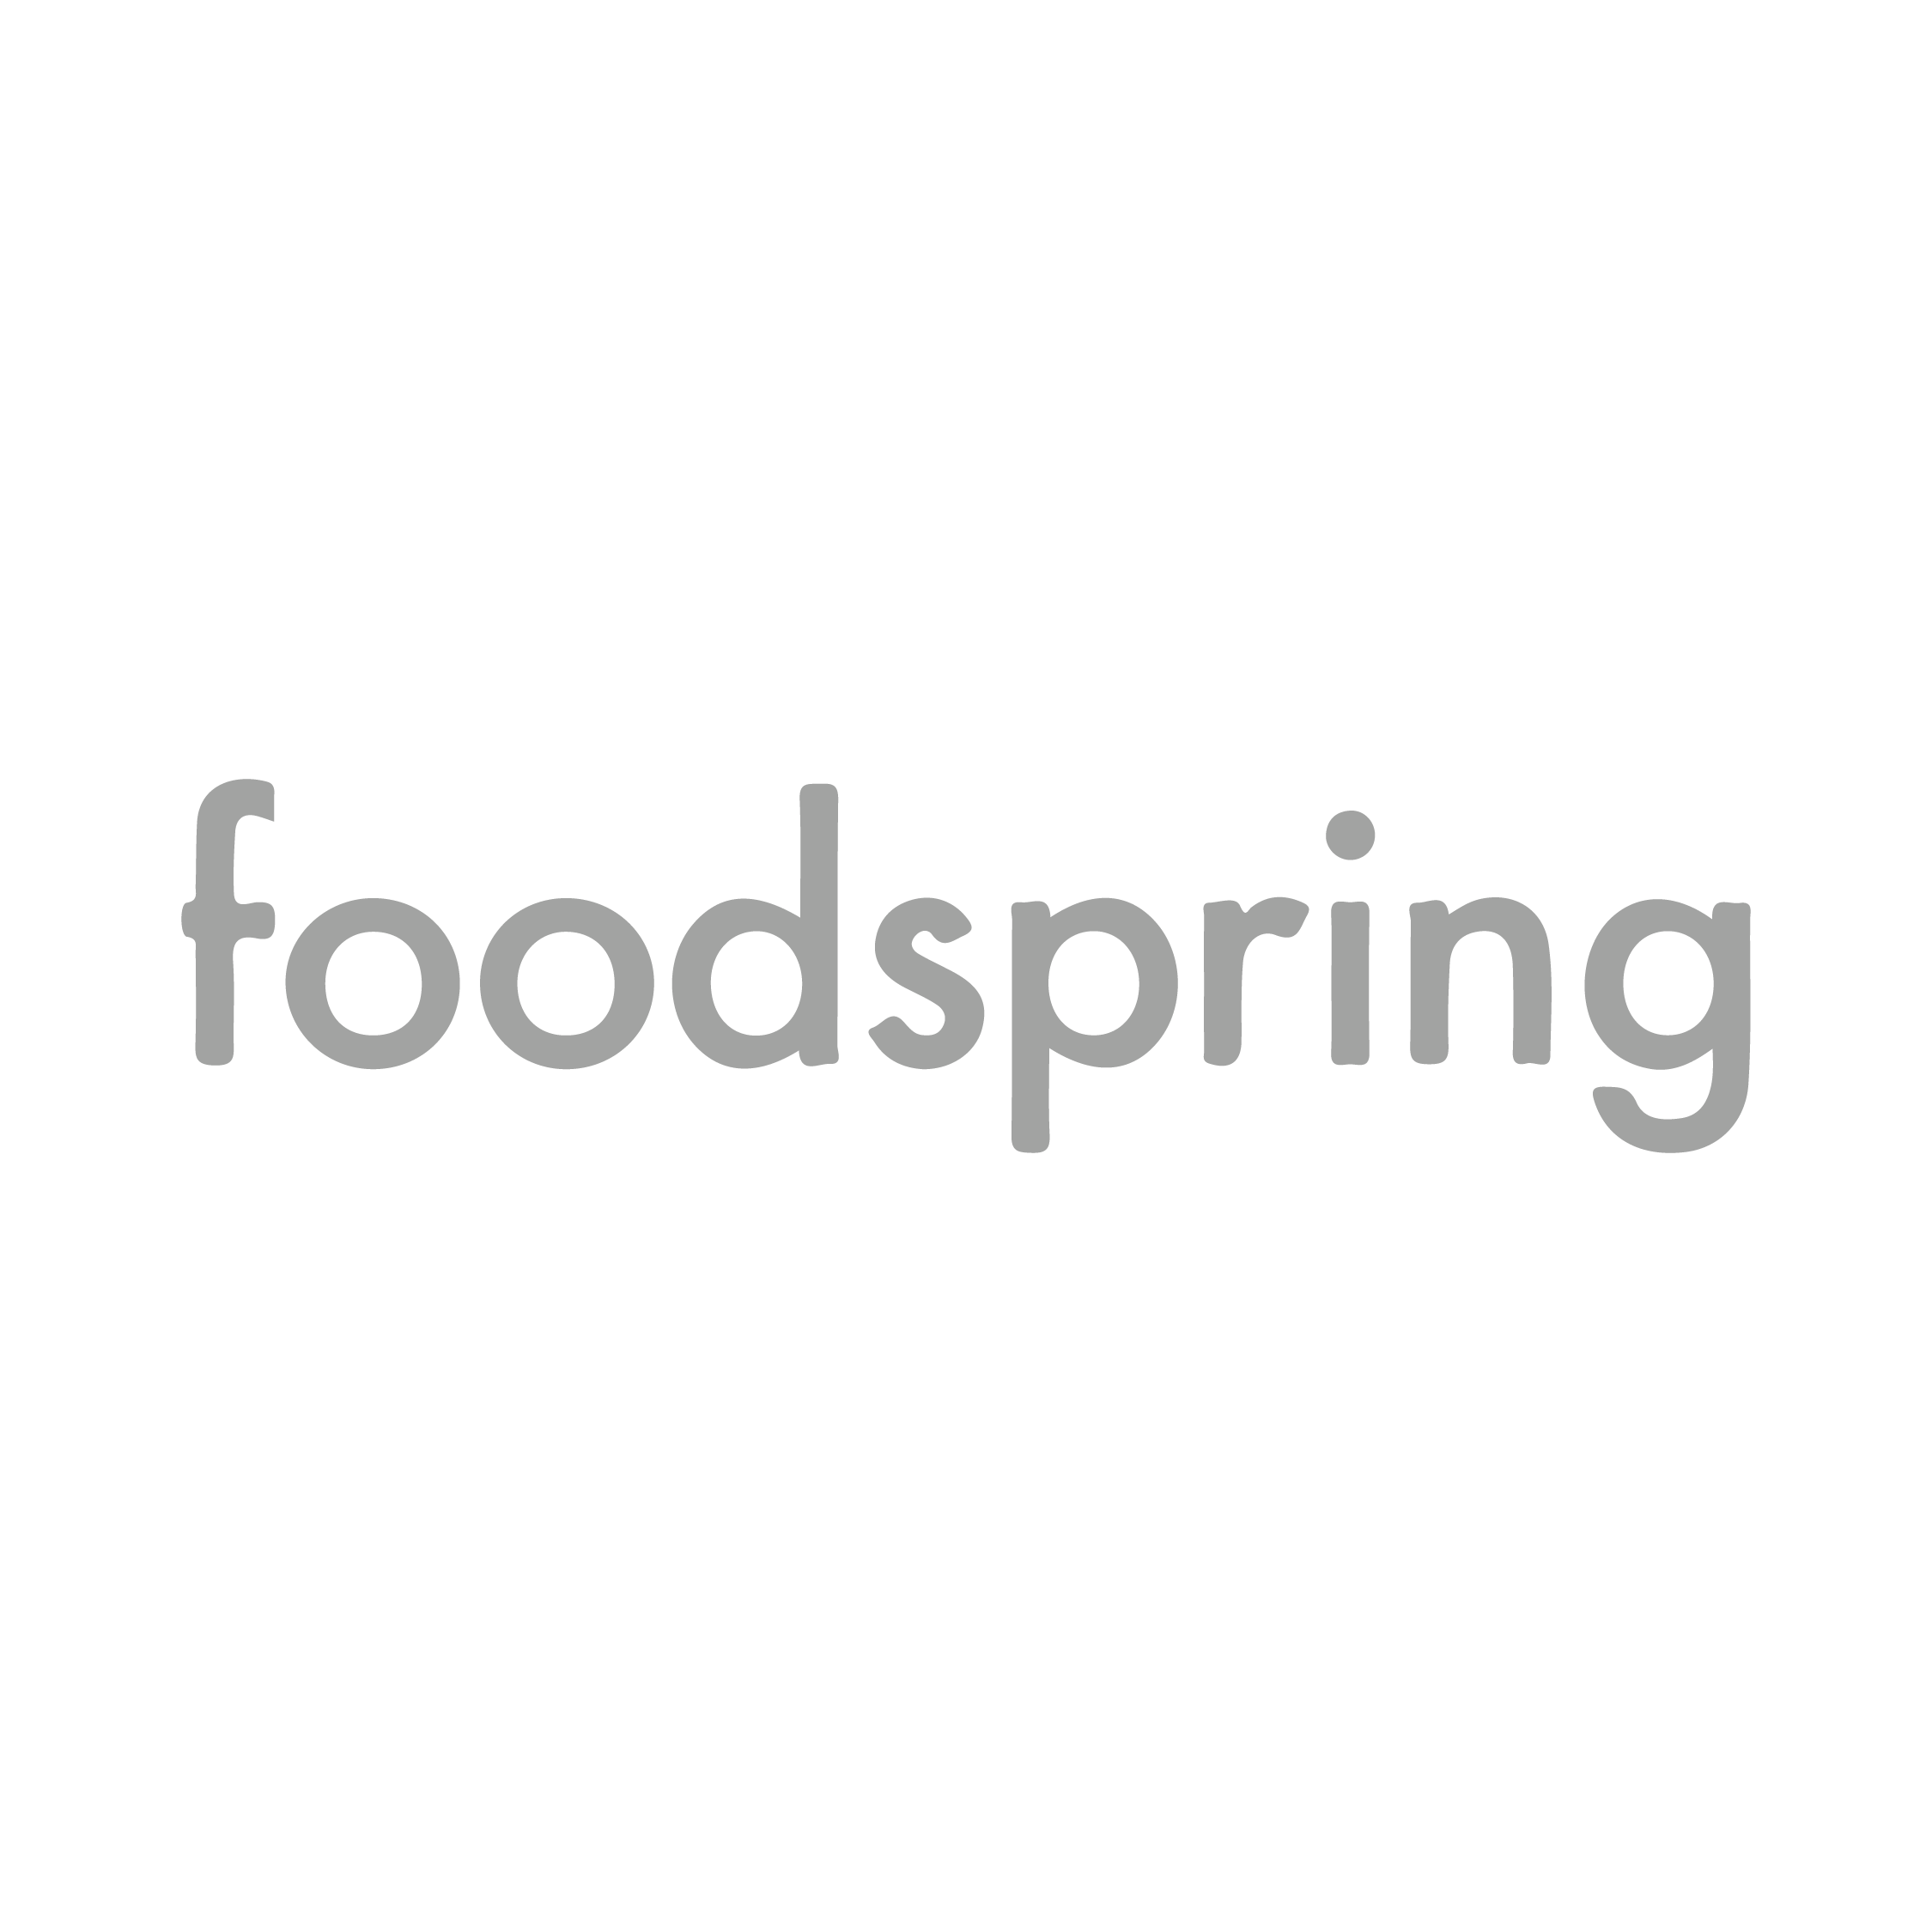 Logo Foodspring - Agence de communication Break-Out Company